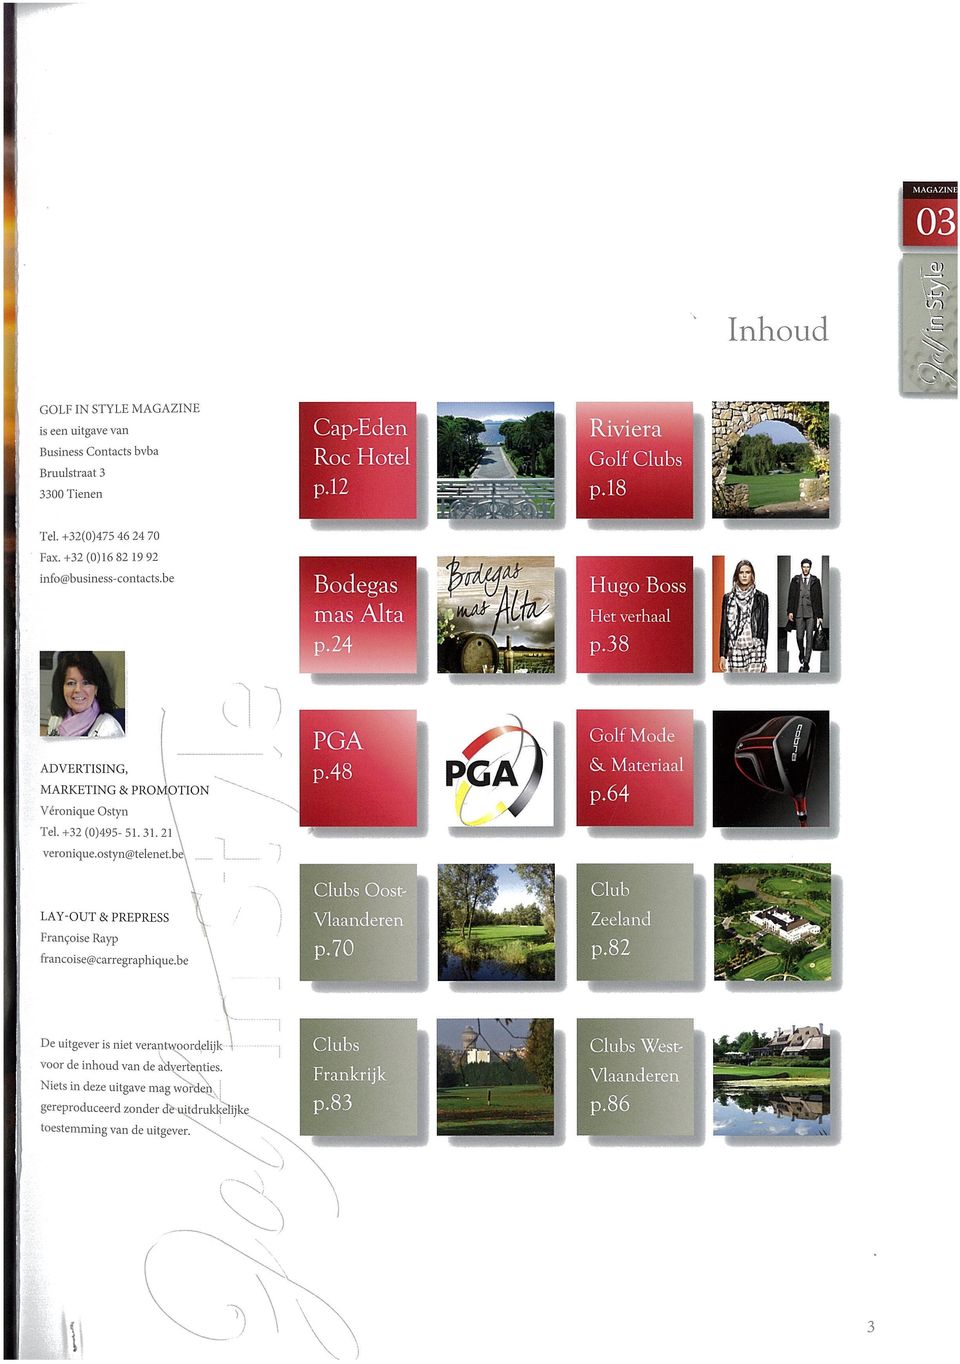 38 PGA Golf Mode ADVERTISING, 48 PG & Materiaal MARKETING & PRO OTION p64 Véronique Ostyn Tel. +32(0)495-51.31.21 veronique.ostyn@telenet.